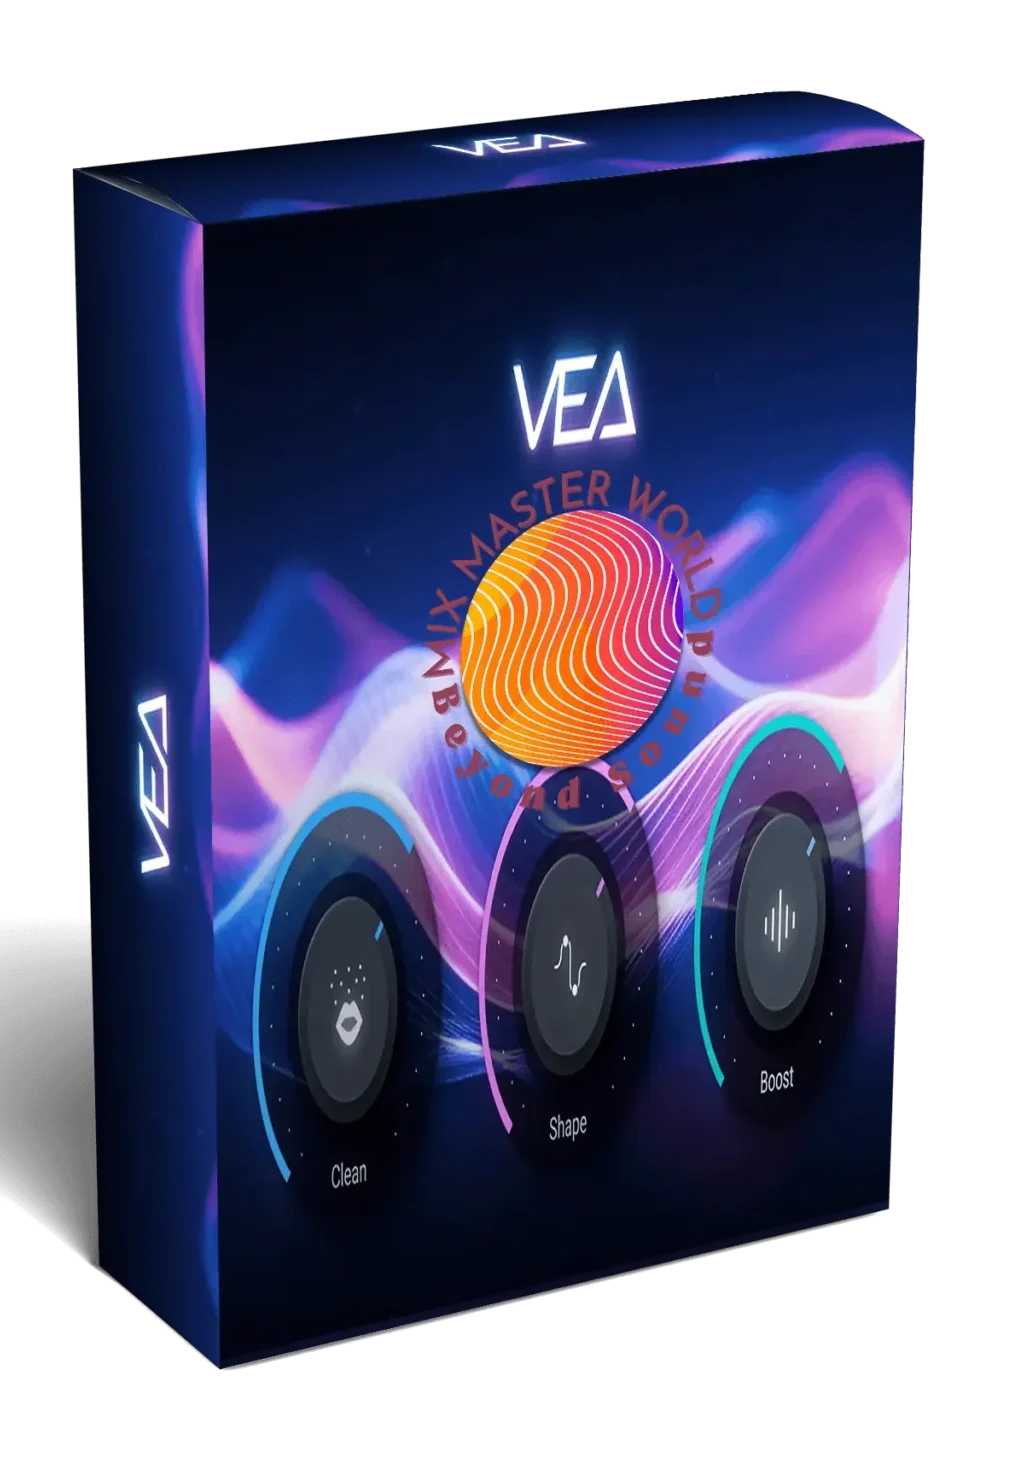 image to VEA izotope software box with VEA plugin show 3 knob in multicolor background.